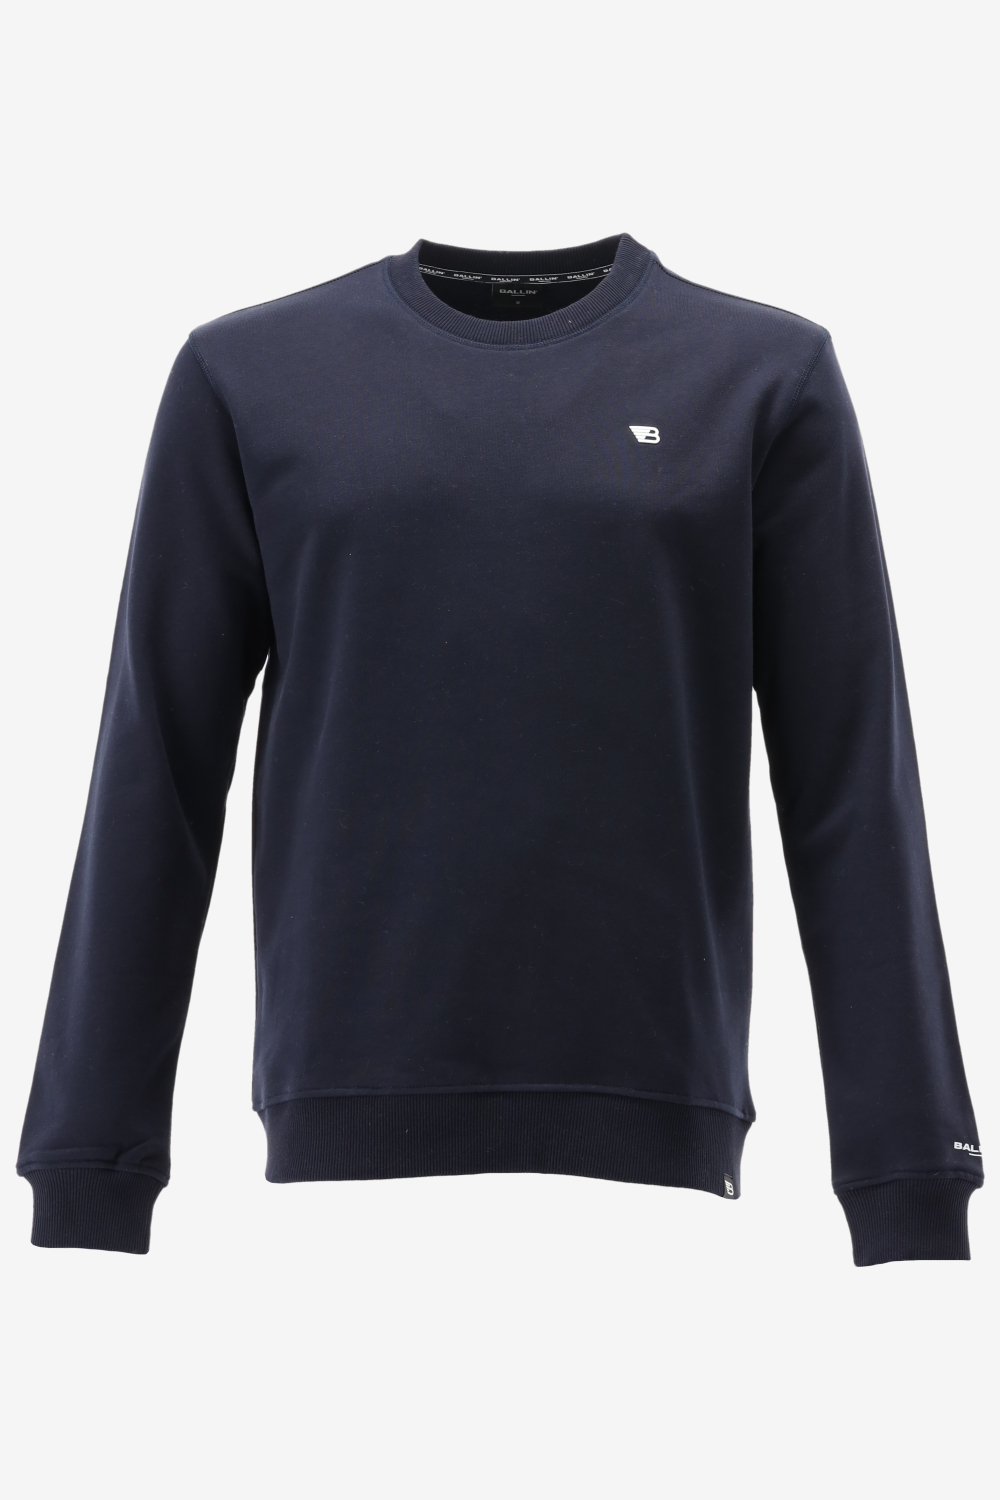 Ballin Amsterdam - Heren Regular Fit Original Sweater - Blauw - Maat XL